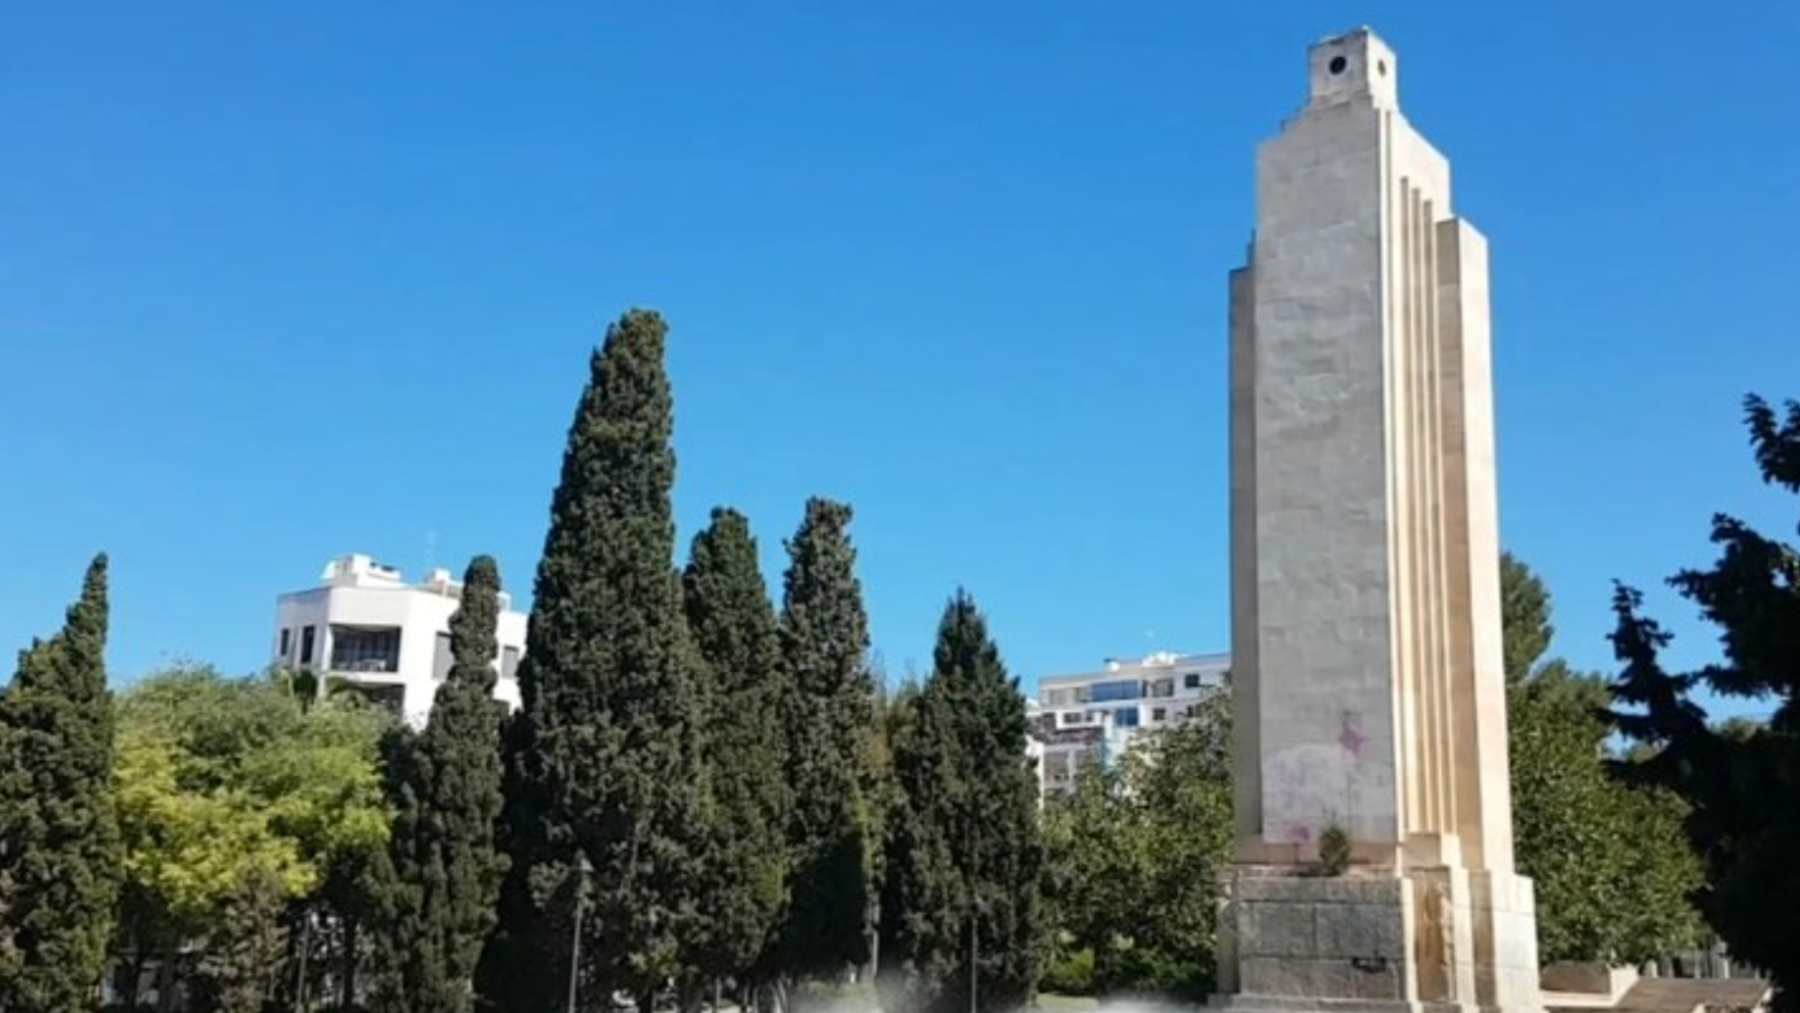 Monumento de homenaje a las víctimas del crucero Baleares en la plaza de Sa Feixina de Palma.